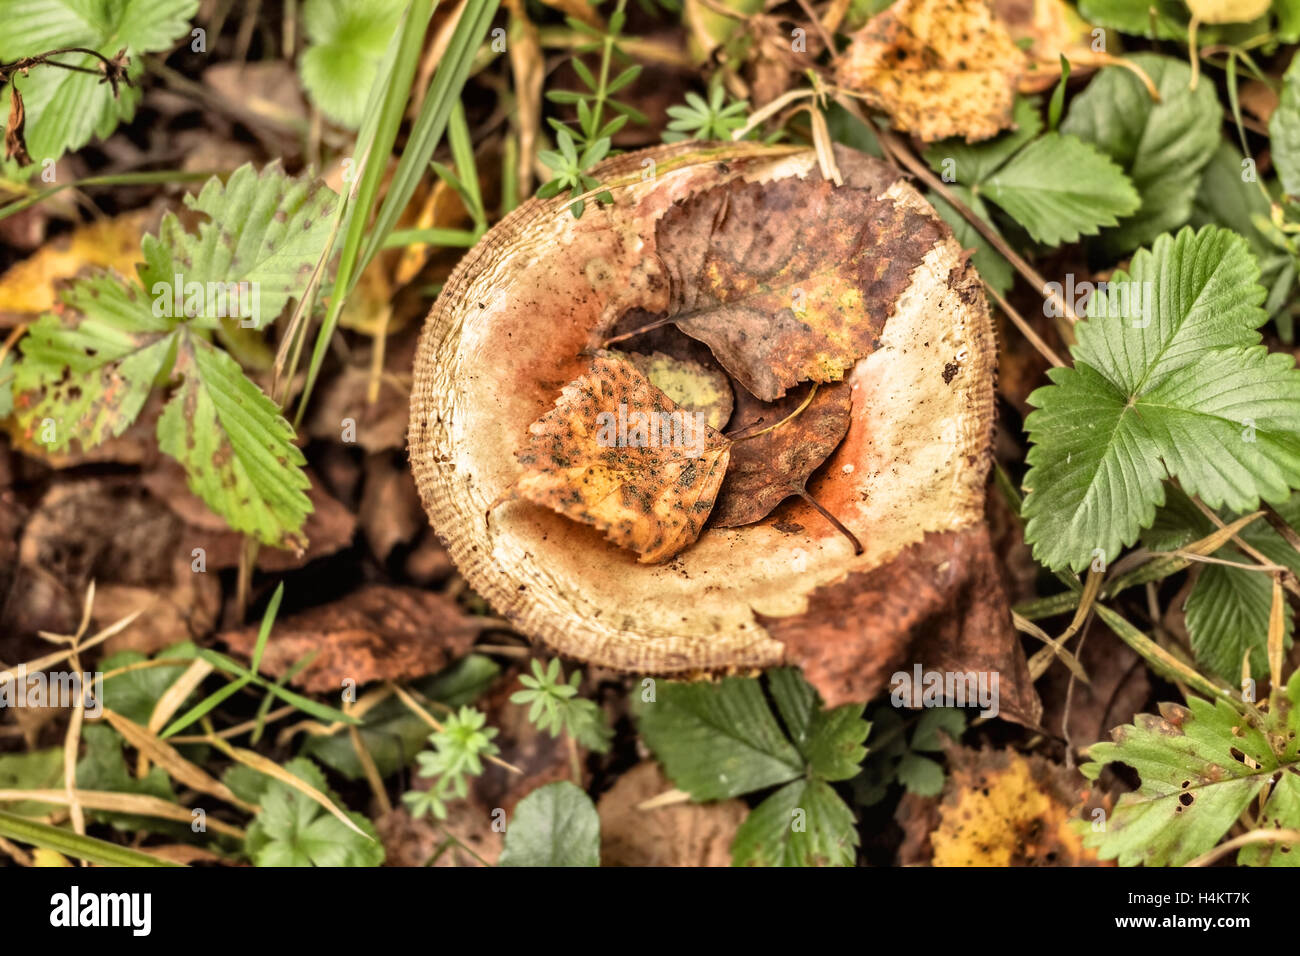 Fresh mushroom in autumn forest under leaves Stock Photo